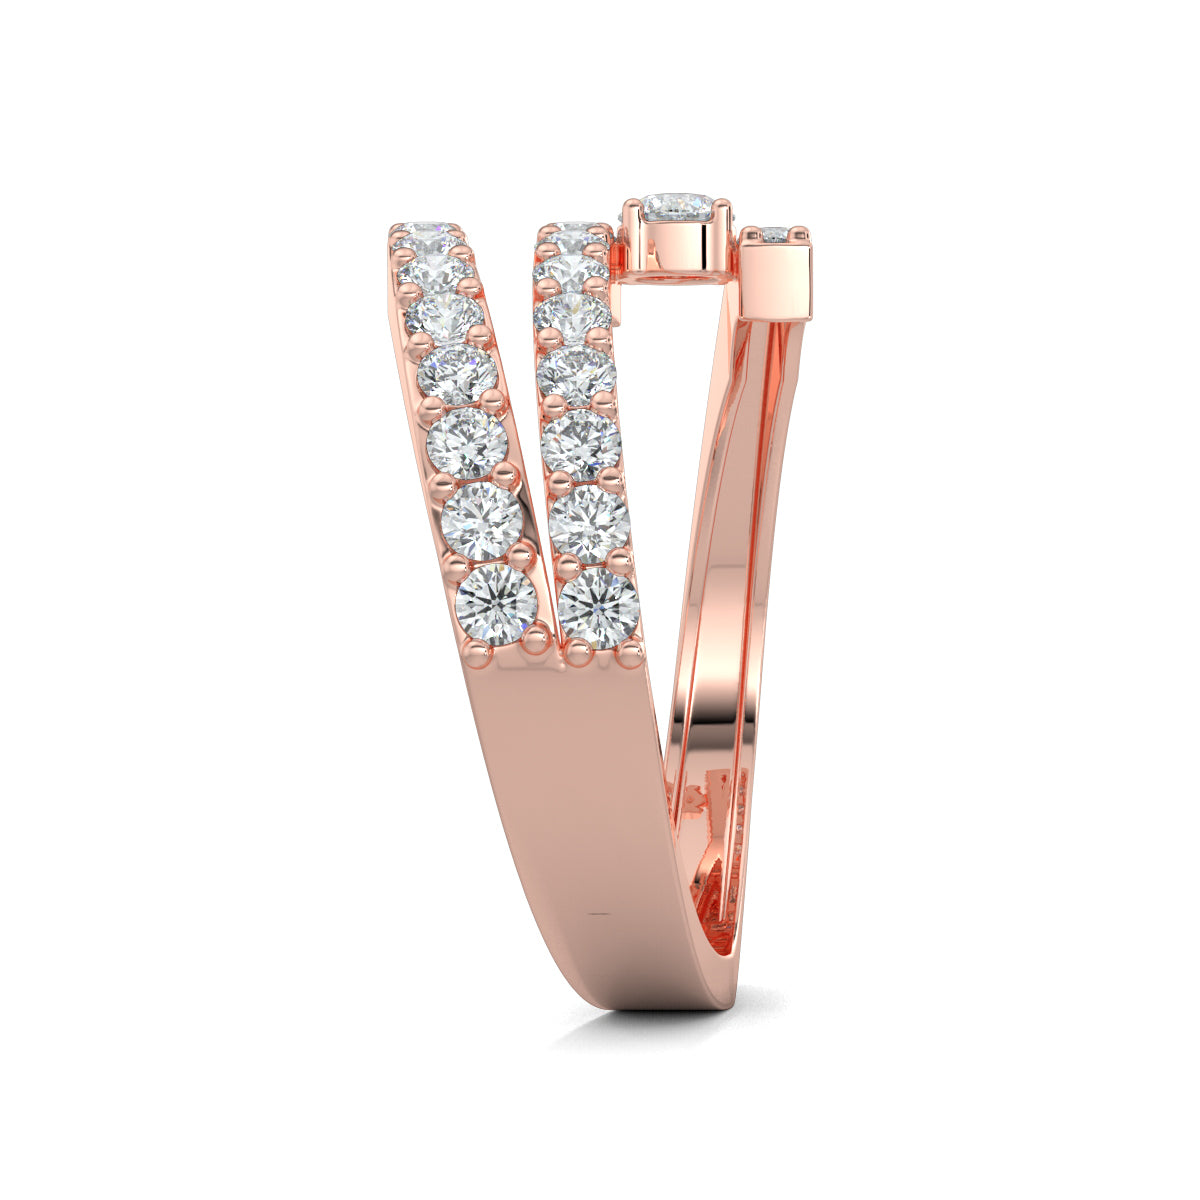 Rose Gold, Diamond Ring, Sway Split Shank Diamond Ring, Natural Diamond Jewelry, Lab-Grown Diamond Jewelry, Everyday Diamond Ring, Round Diamond Band, Modern Luxury Ring